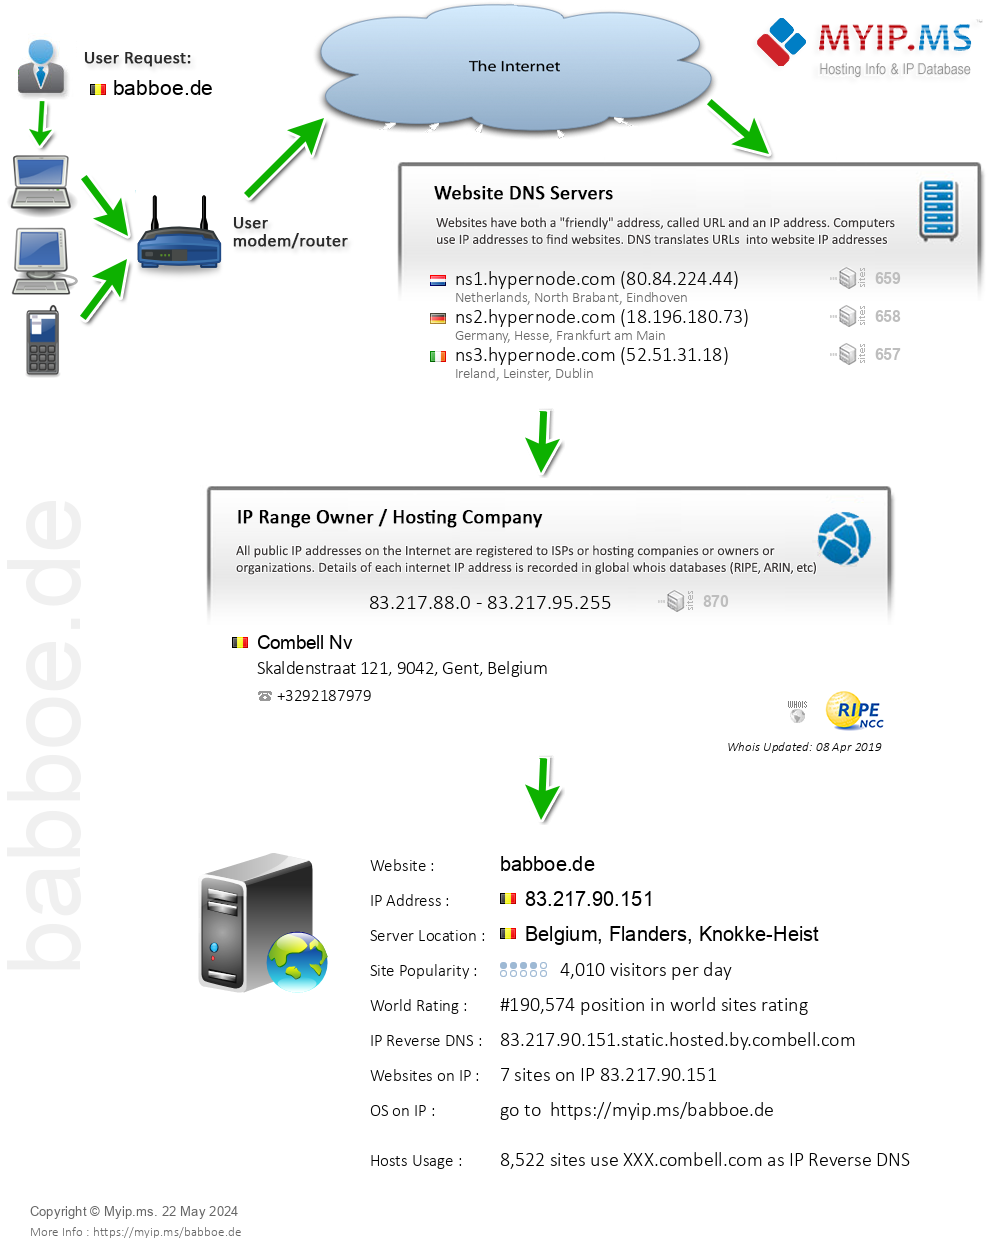 Babboe.de - Website Hosting Visual IP Diagram